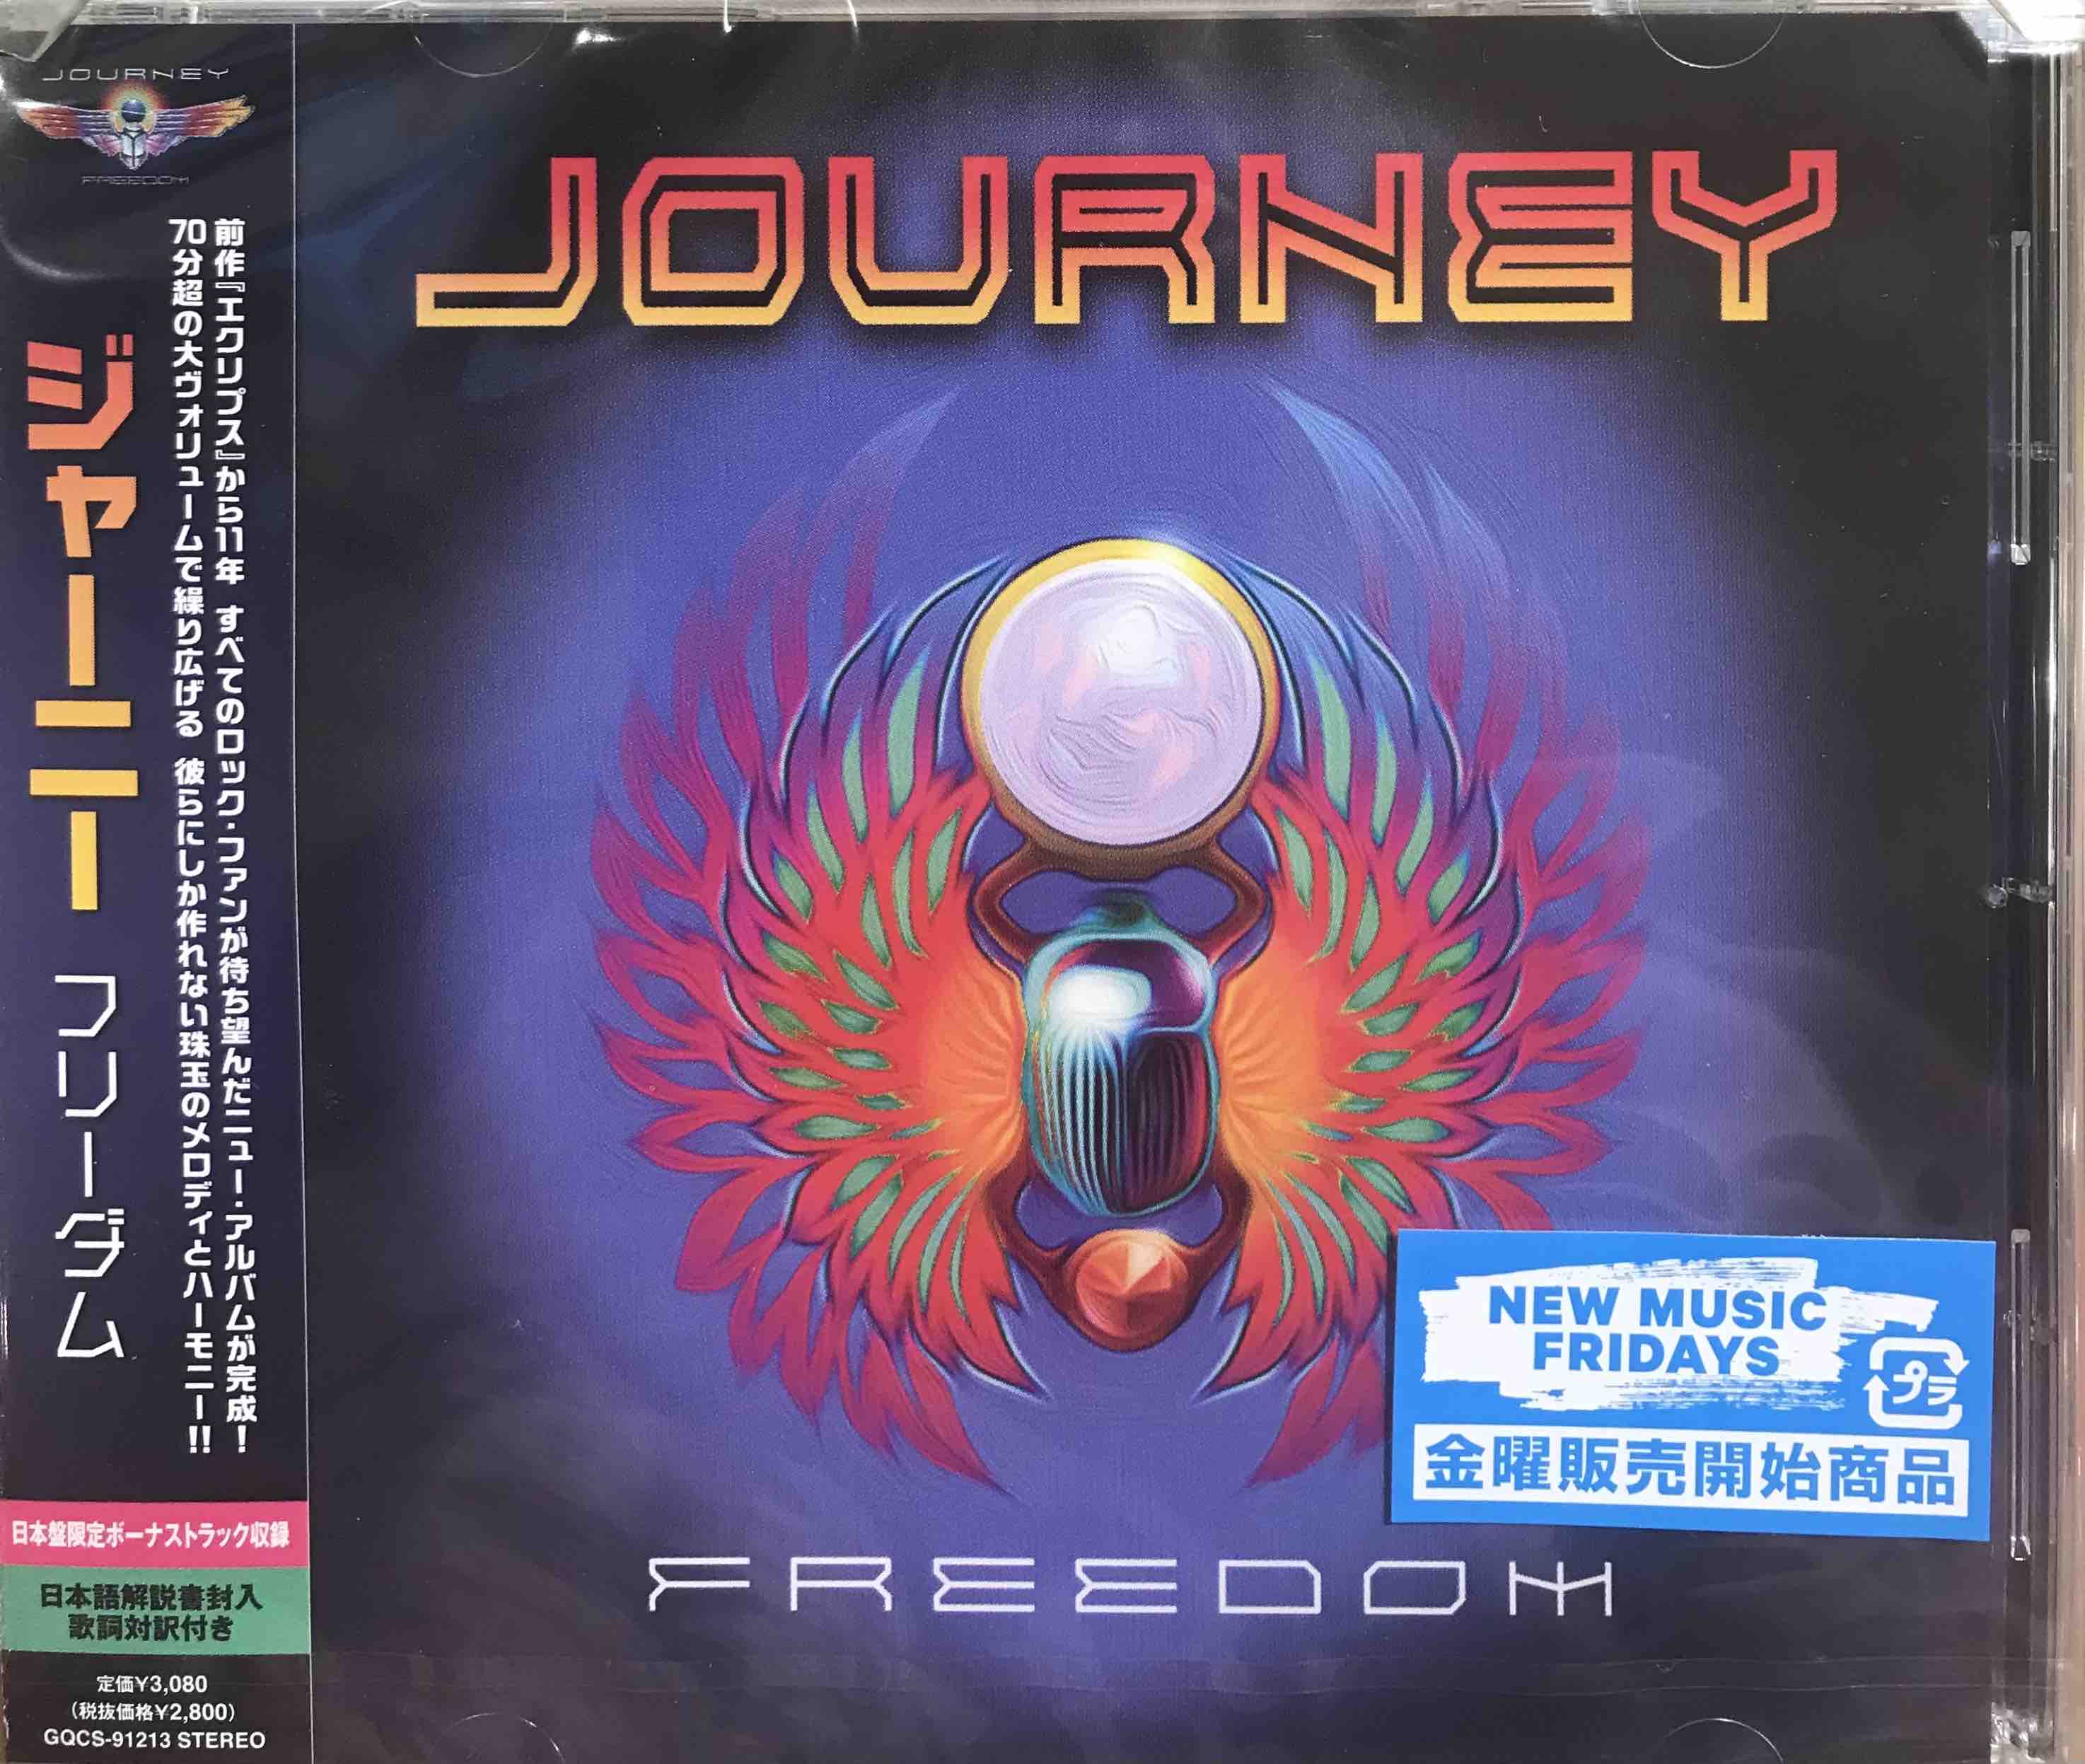 Journey ‎– Freedom